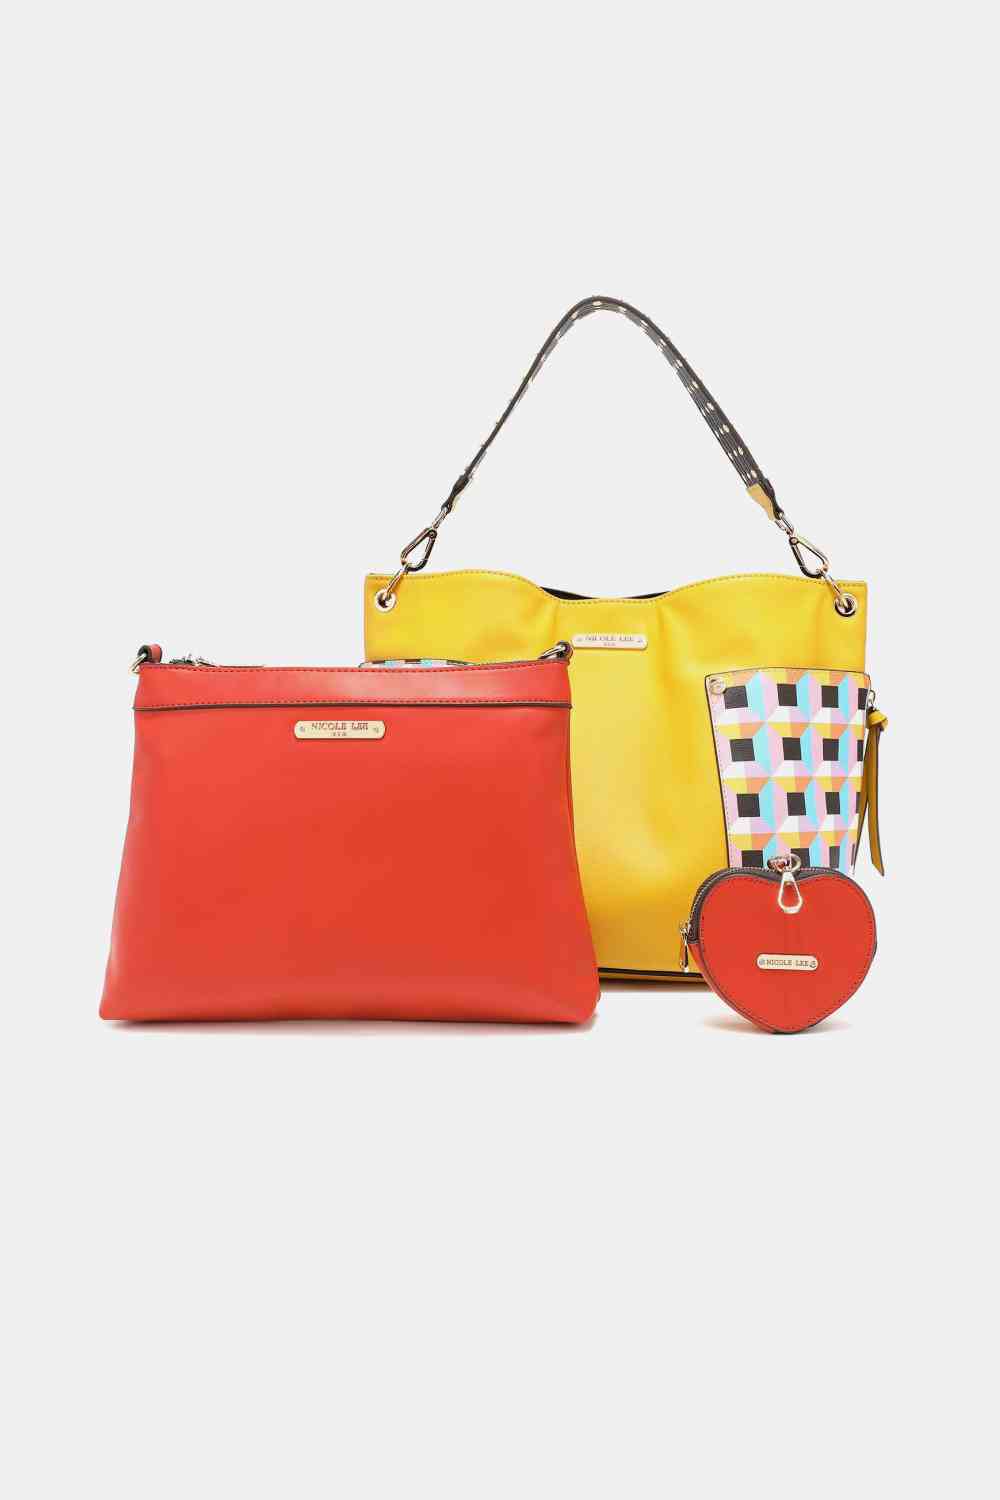 Nicole Lee USA Quihn 3-Piece Handbag Set Yellow